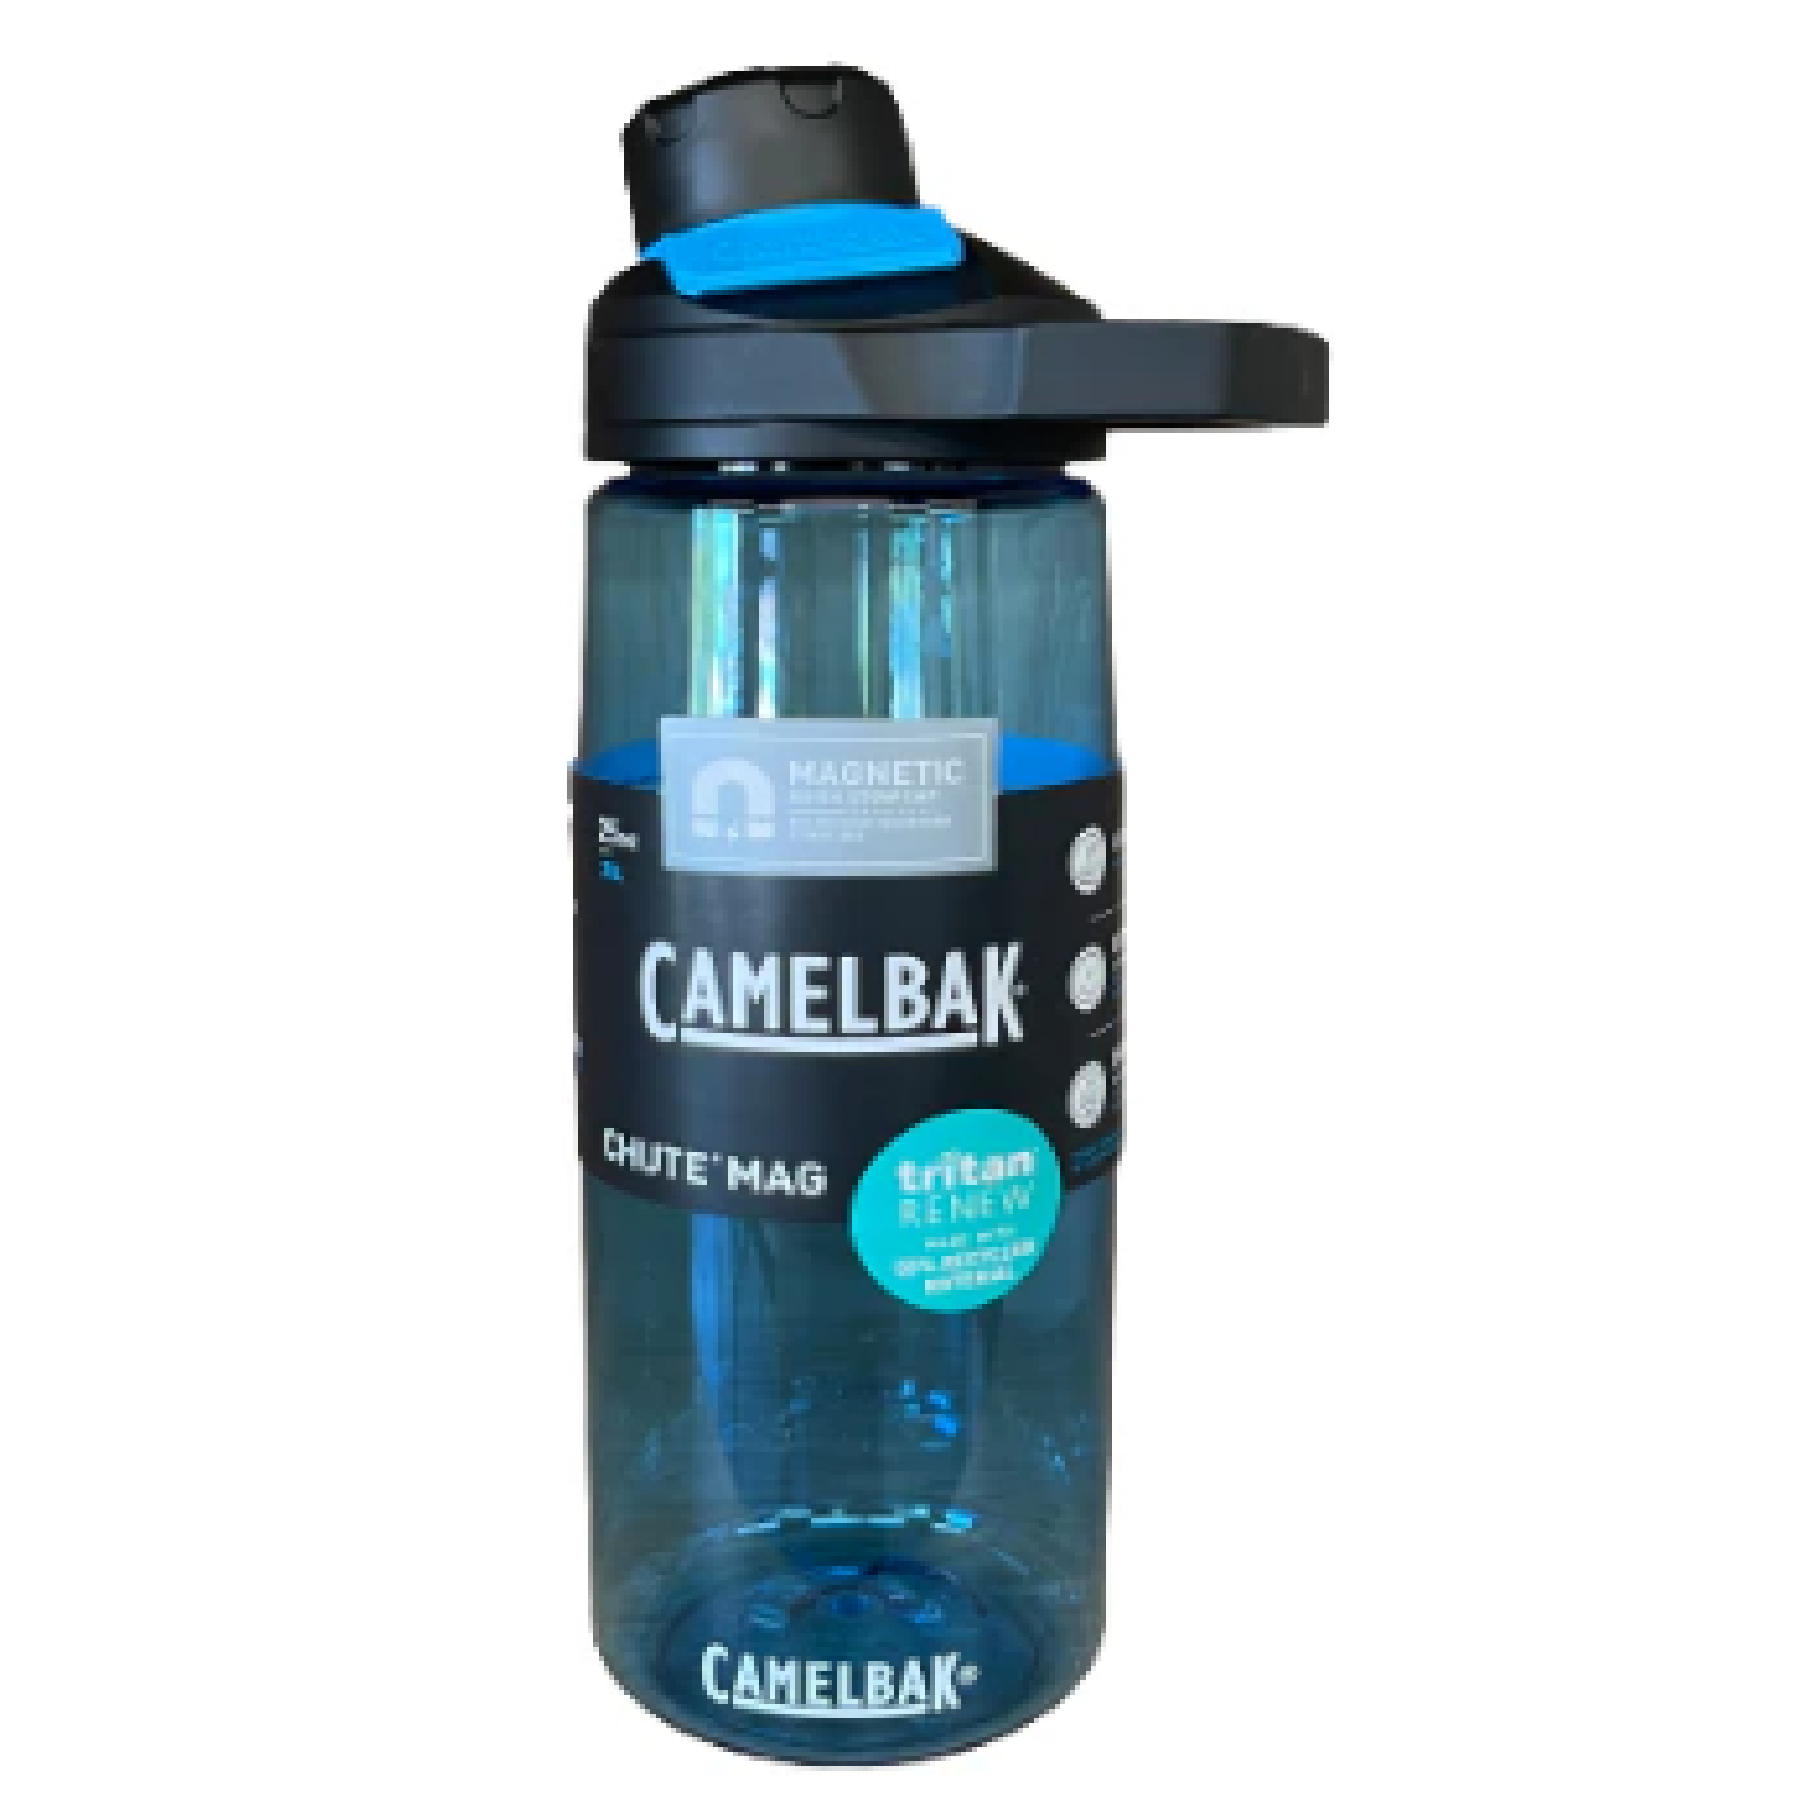 CAMELBAK CHUTE MAG Water Bottle 20 OZ TRUE BLUE